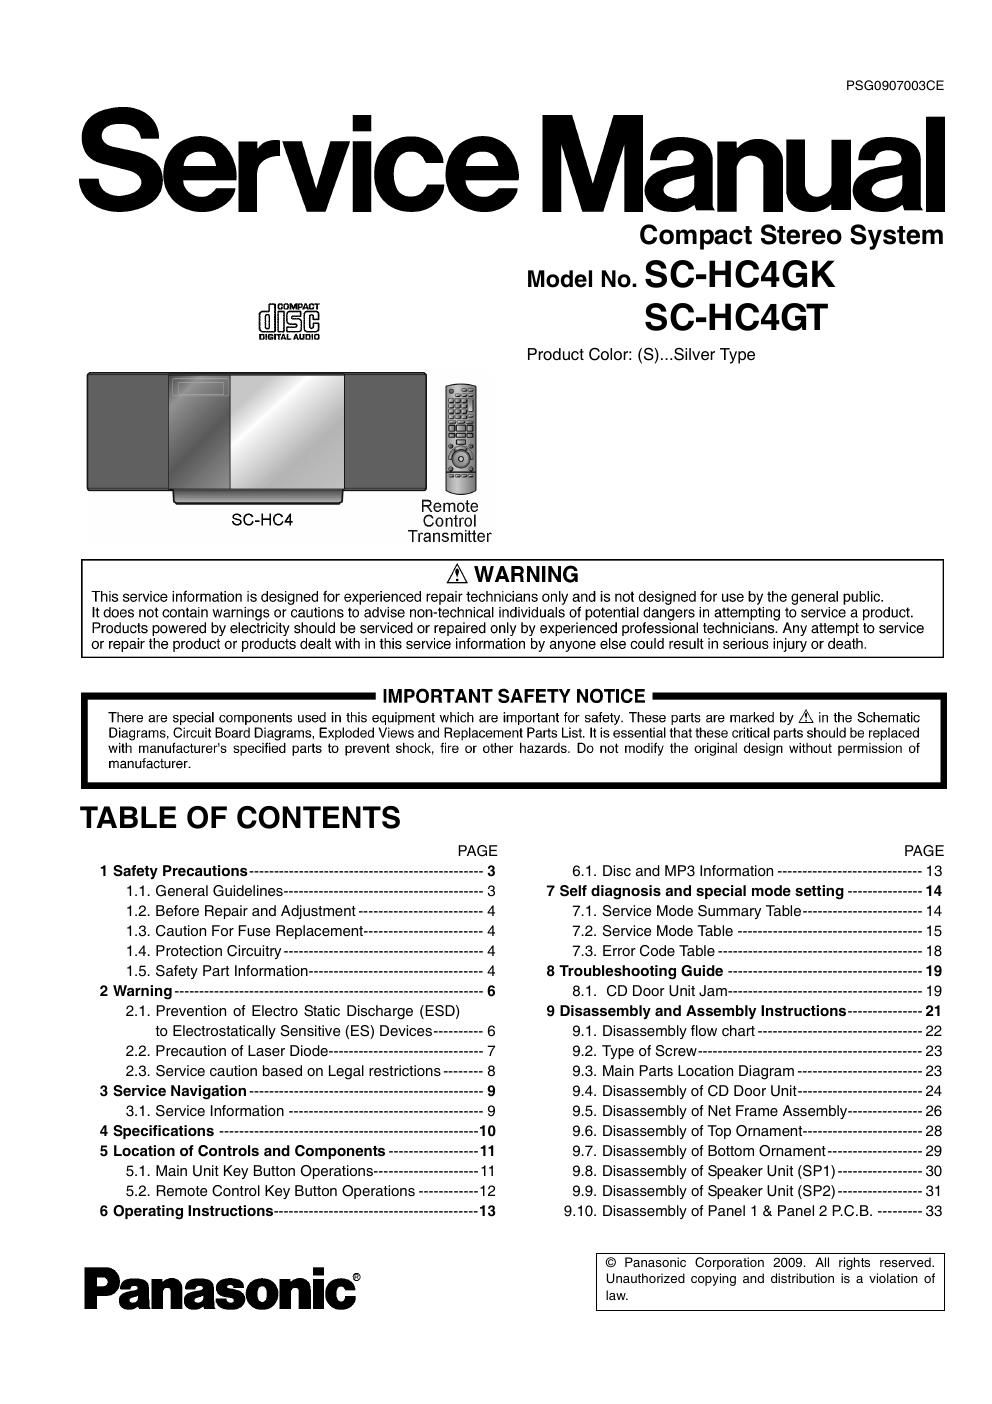 panasonic sc hc 4 gk service manual